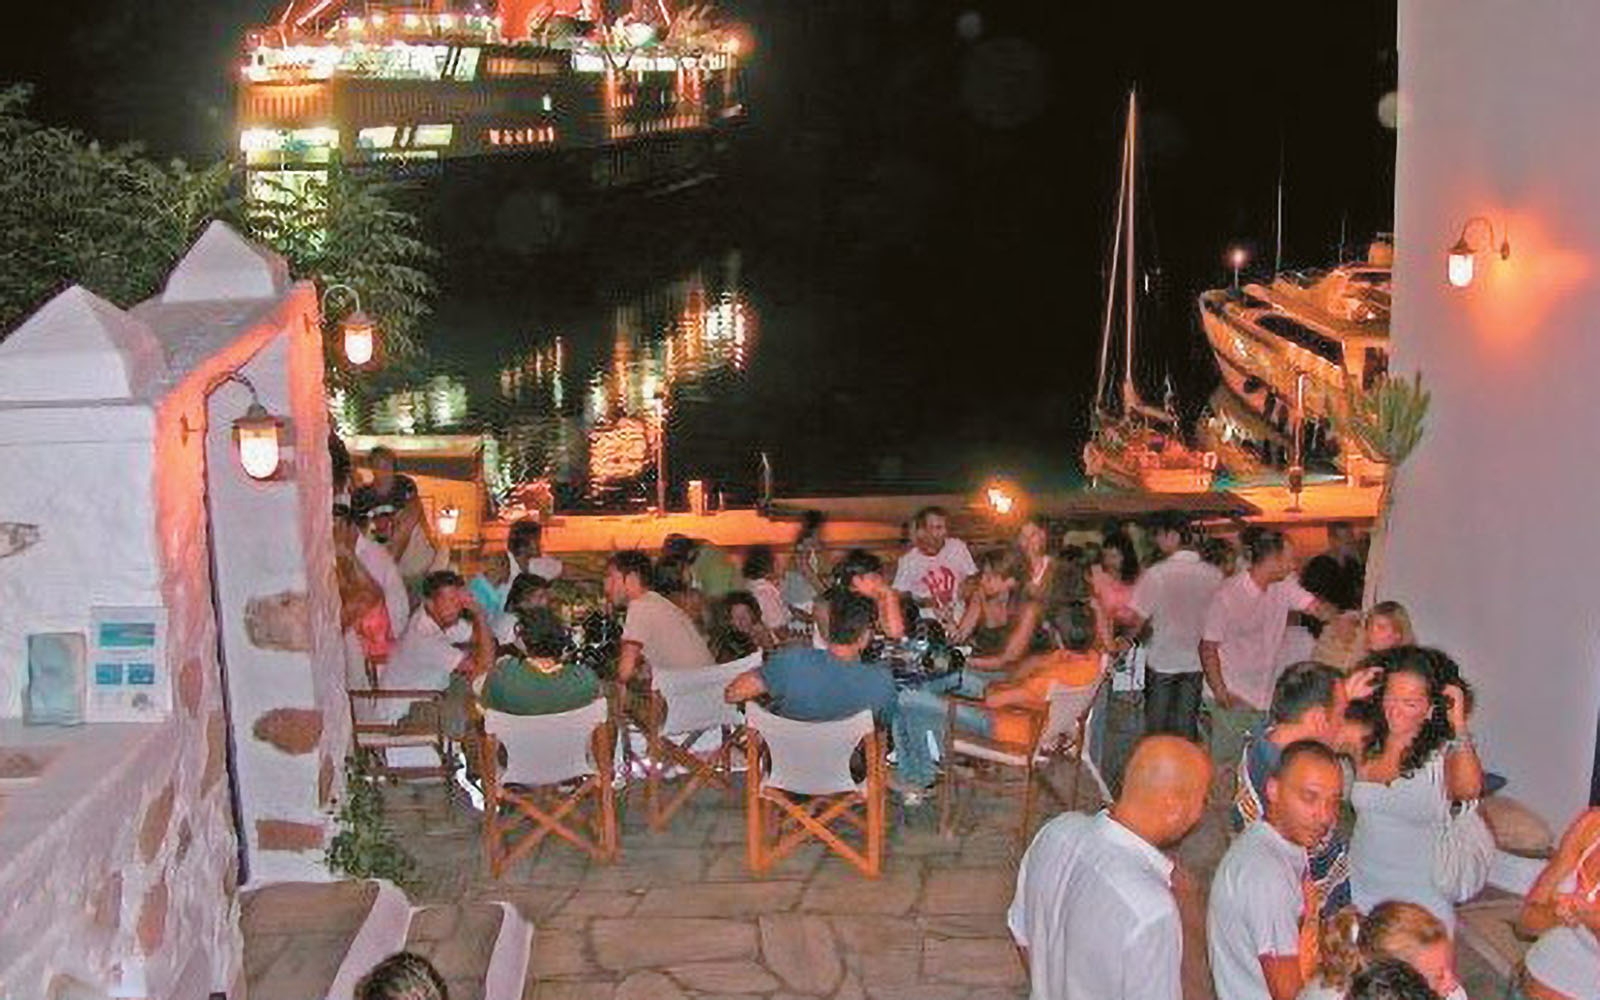 Entertainment on Milos Island